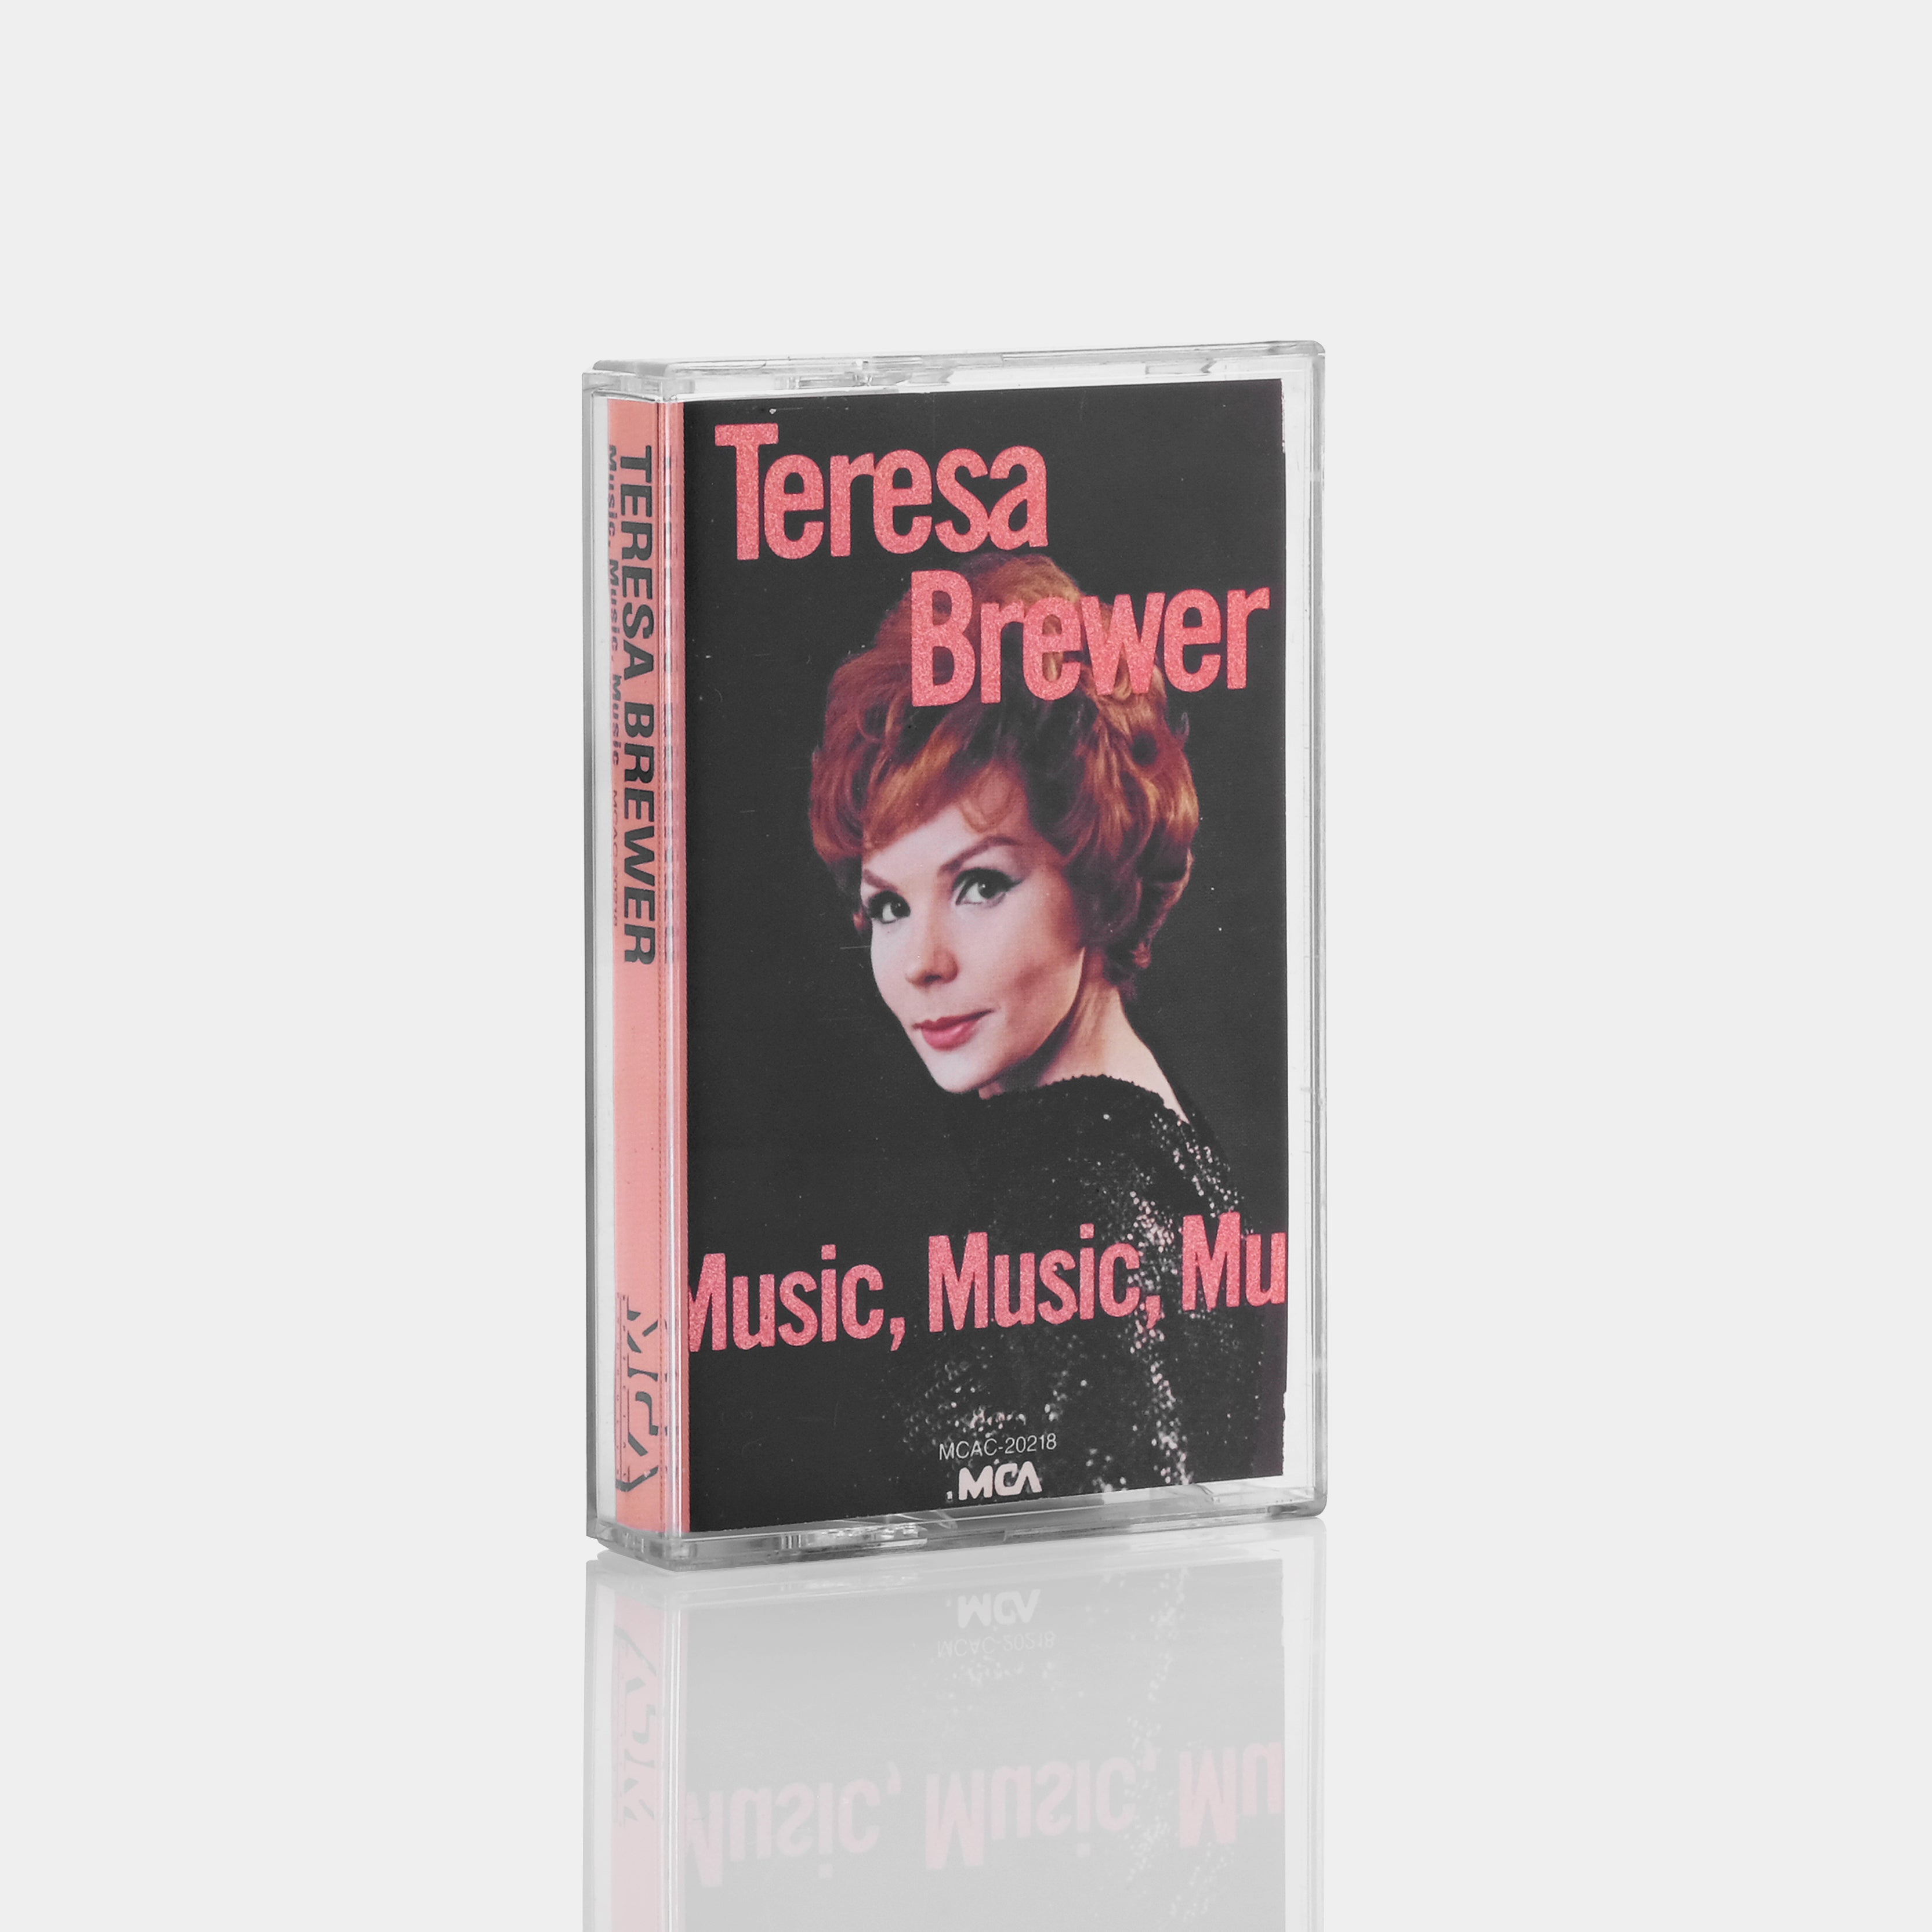 Teresa Brewer - Music, Music, Music Cassette Tape